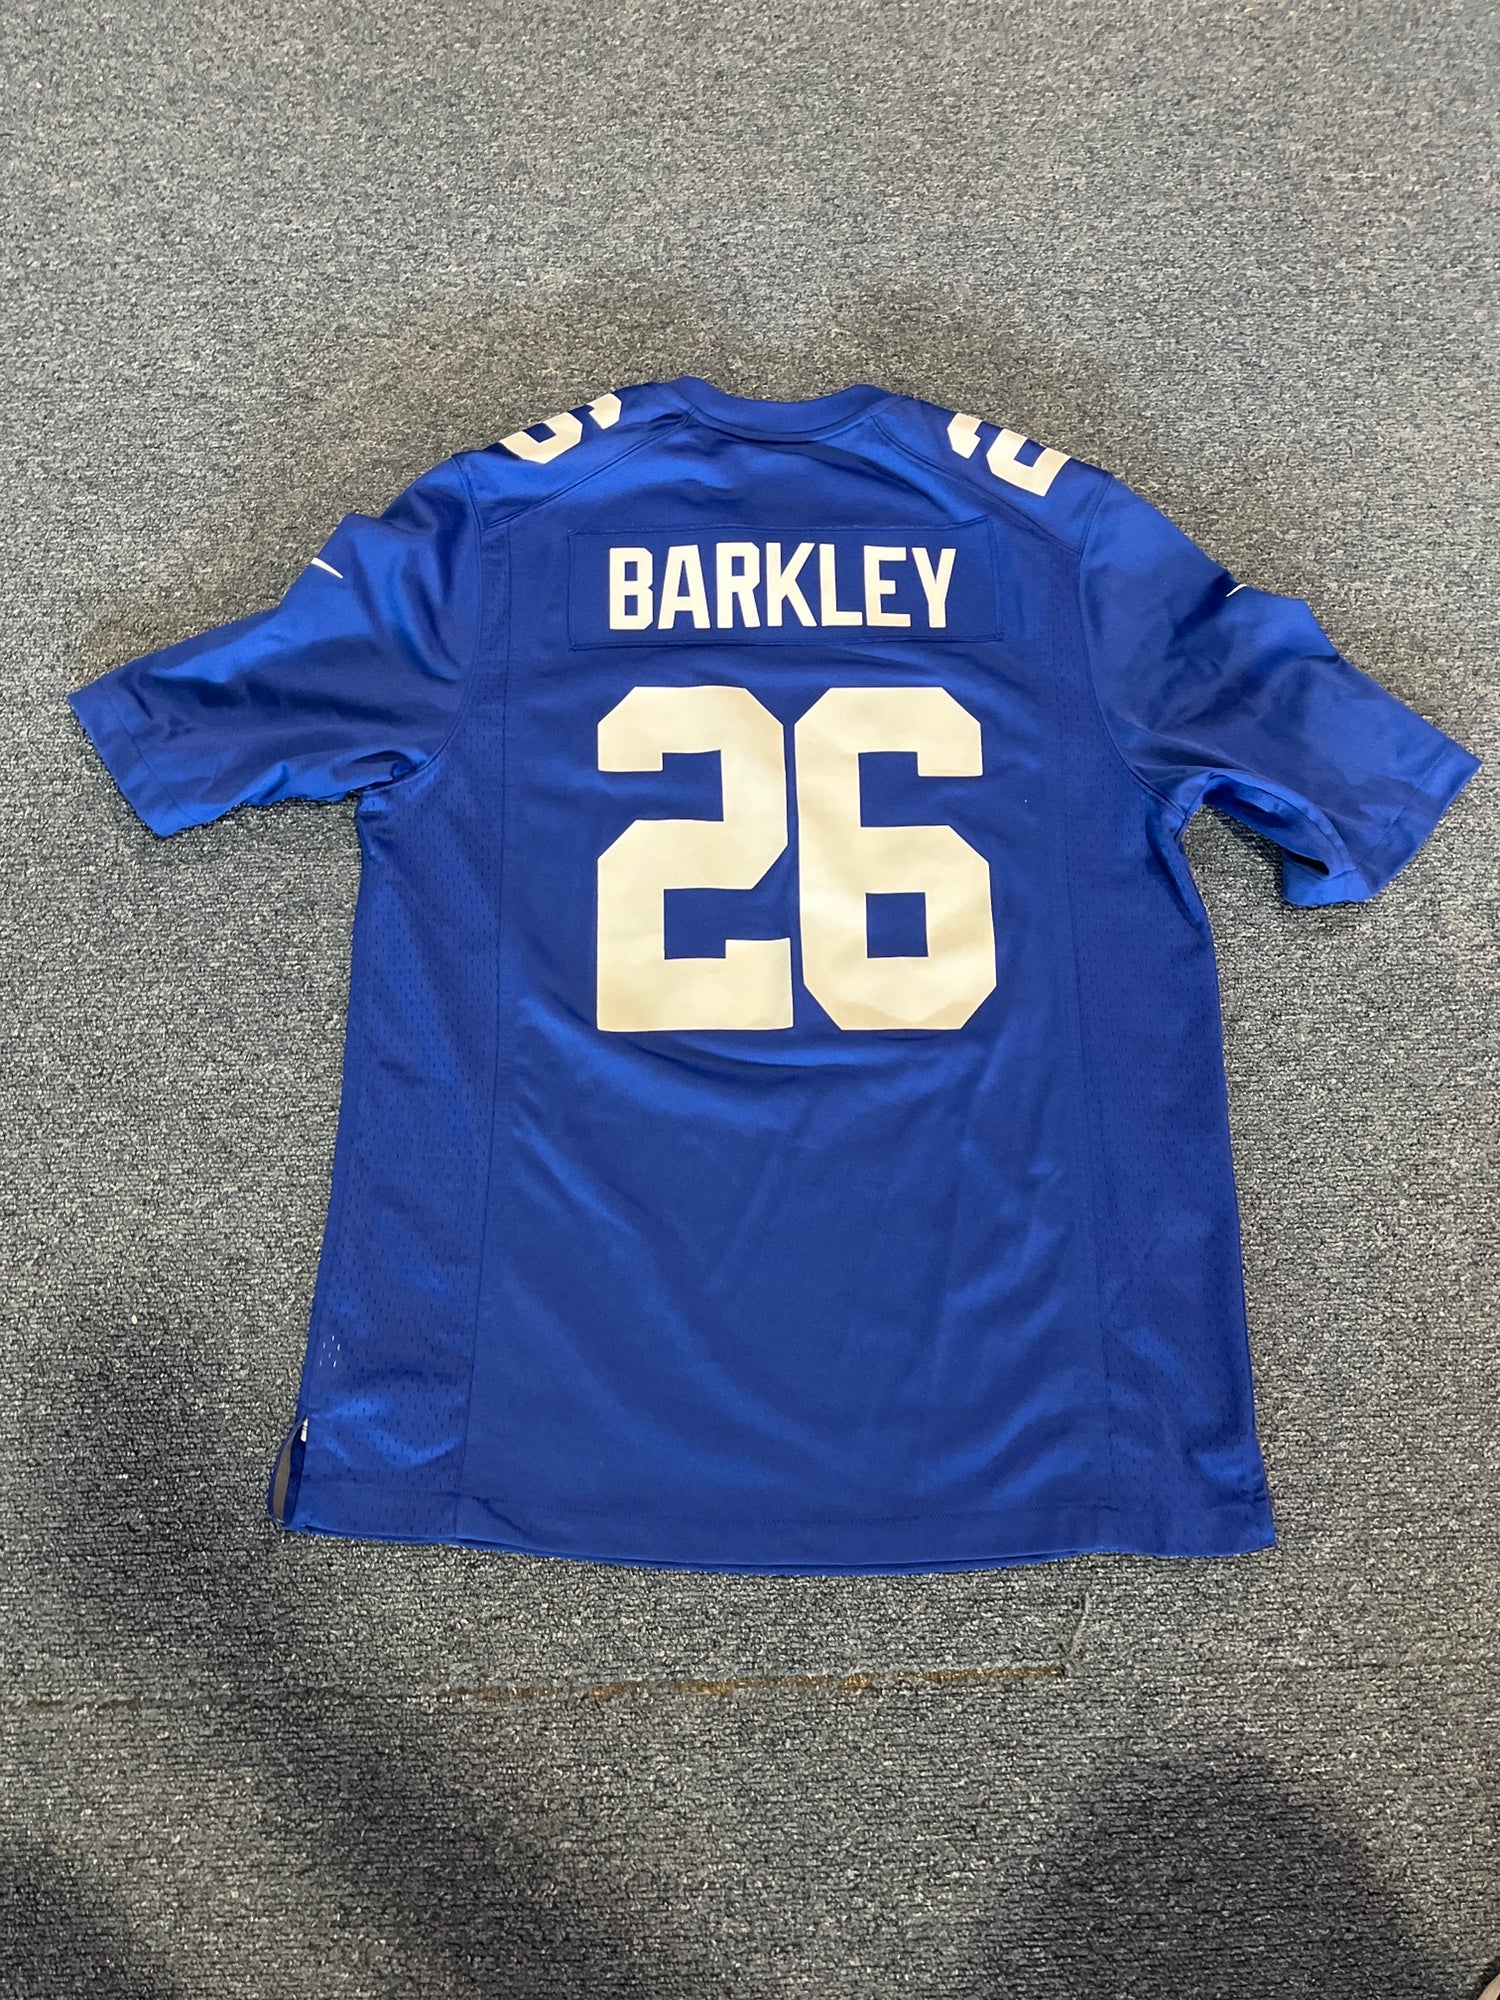  Saquon Barkley New York Giants #26 Blue Youth Player